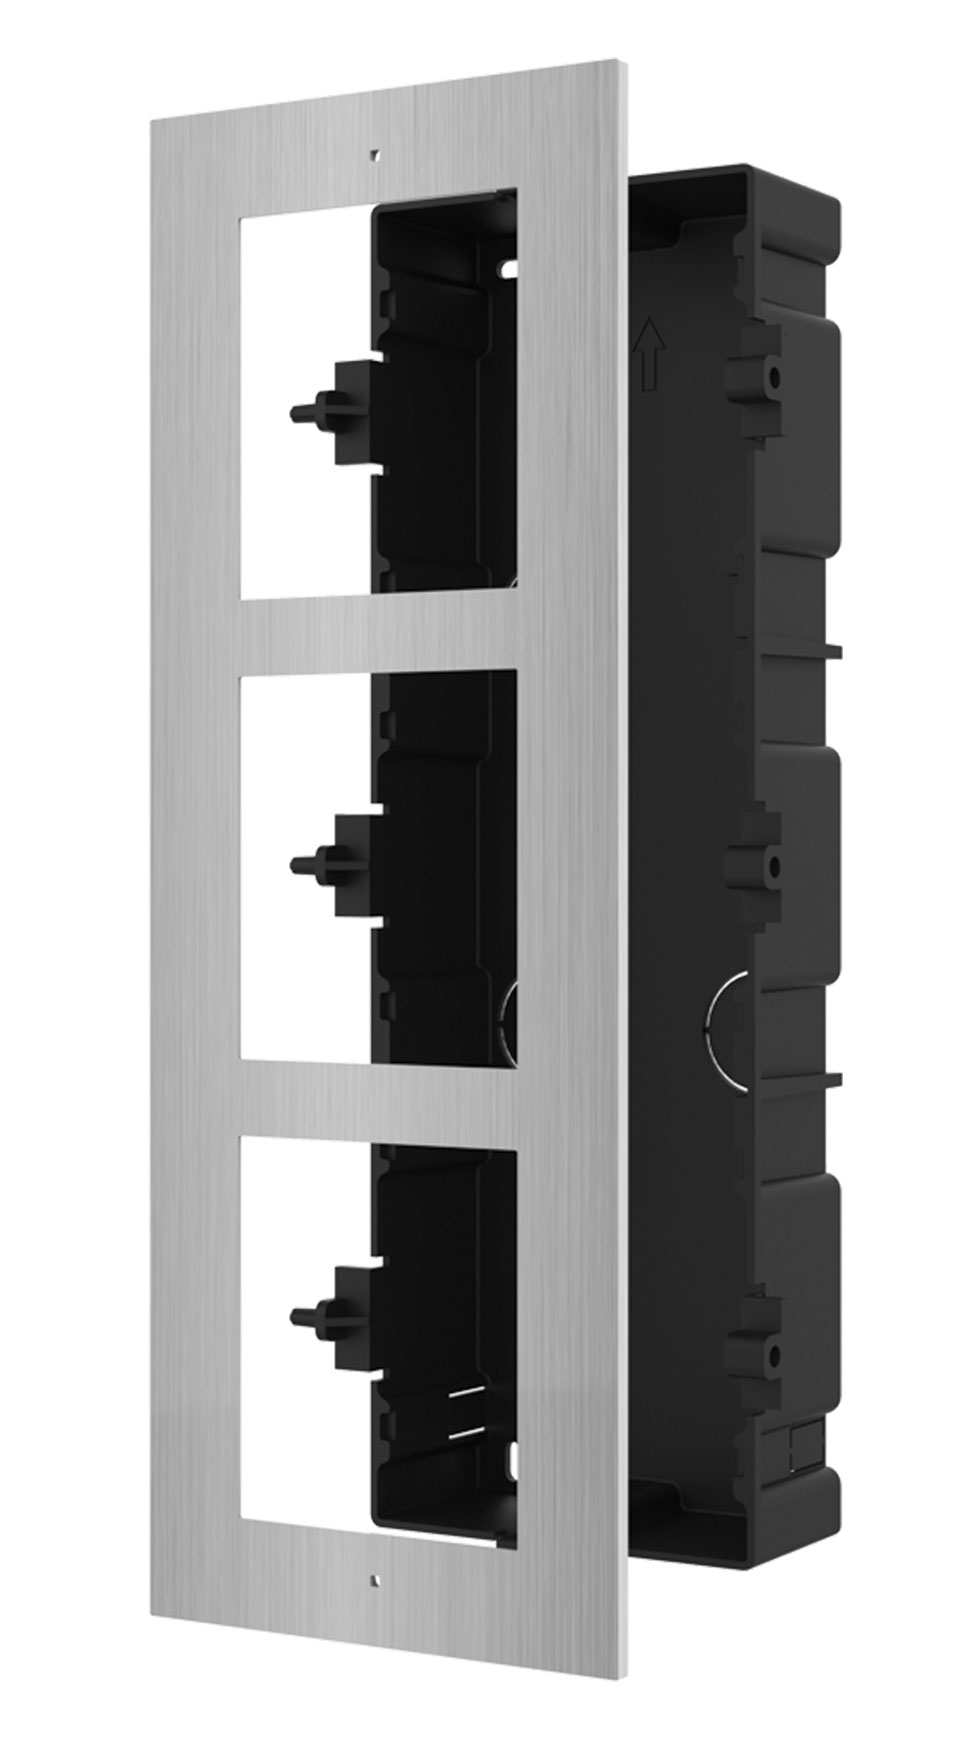 Hikvision DS-KD-ACF3(Steel) - Čelična dozna za tri modula interfona